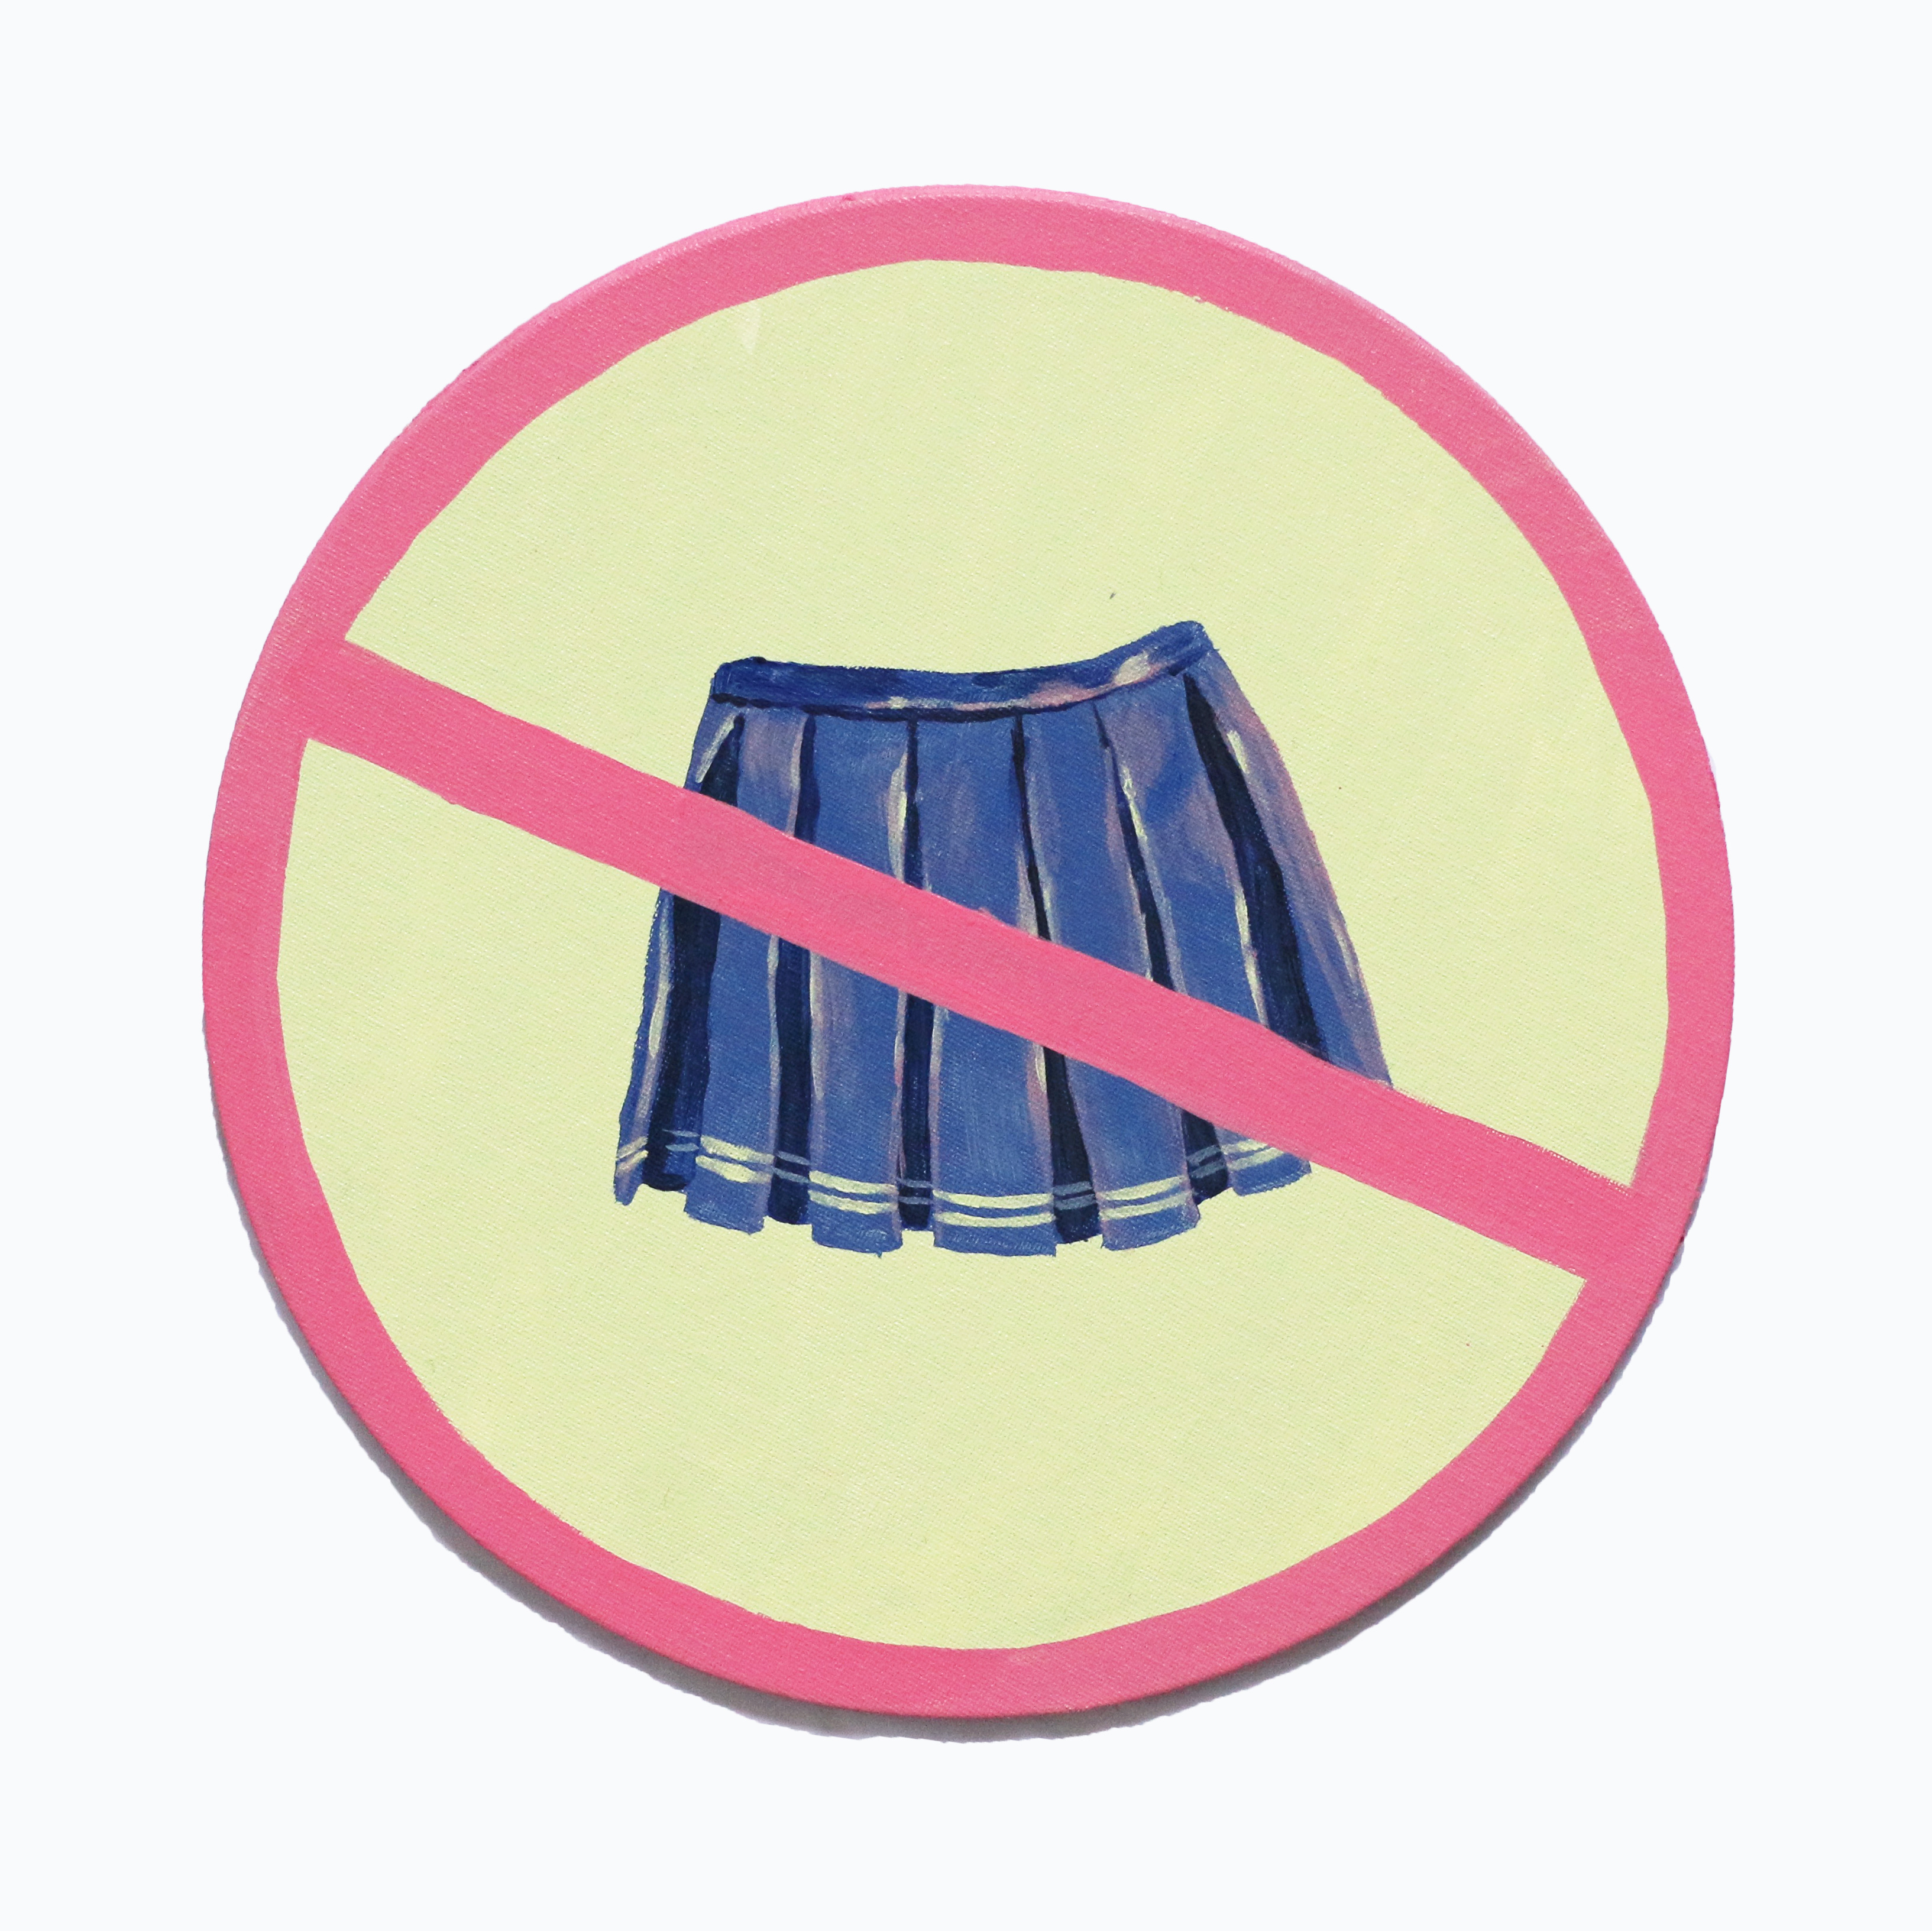 Юбка соска. Запрет на юбки. Запрещено в юбке. Значок запрет юбок. Знак запрещено в шортах.